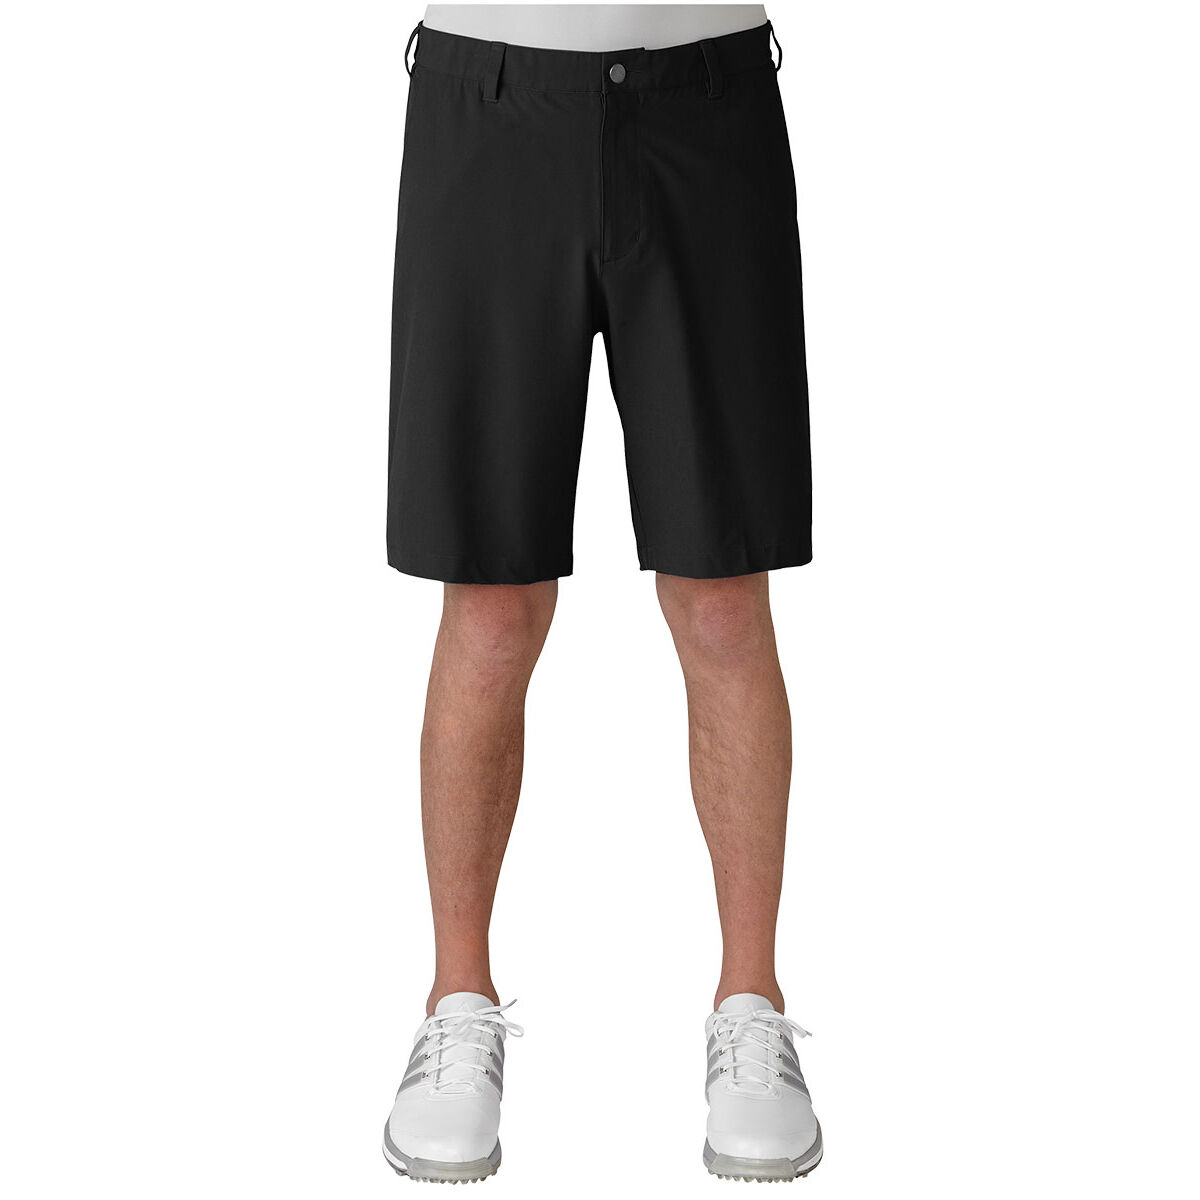 adidas golf shorts clearance